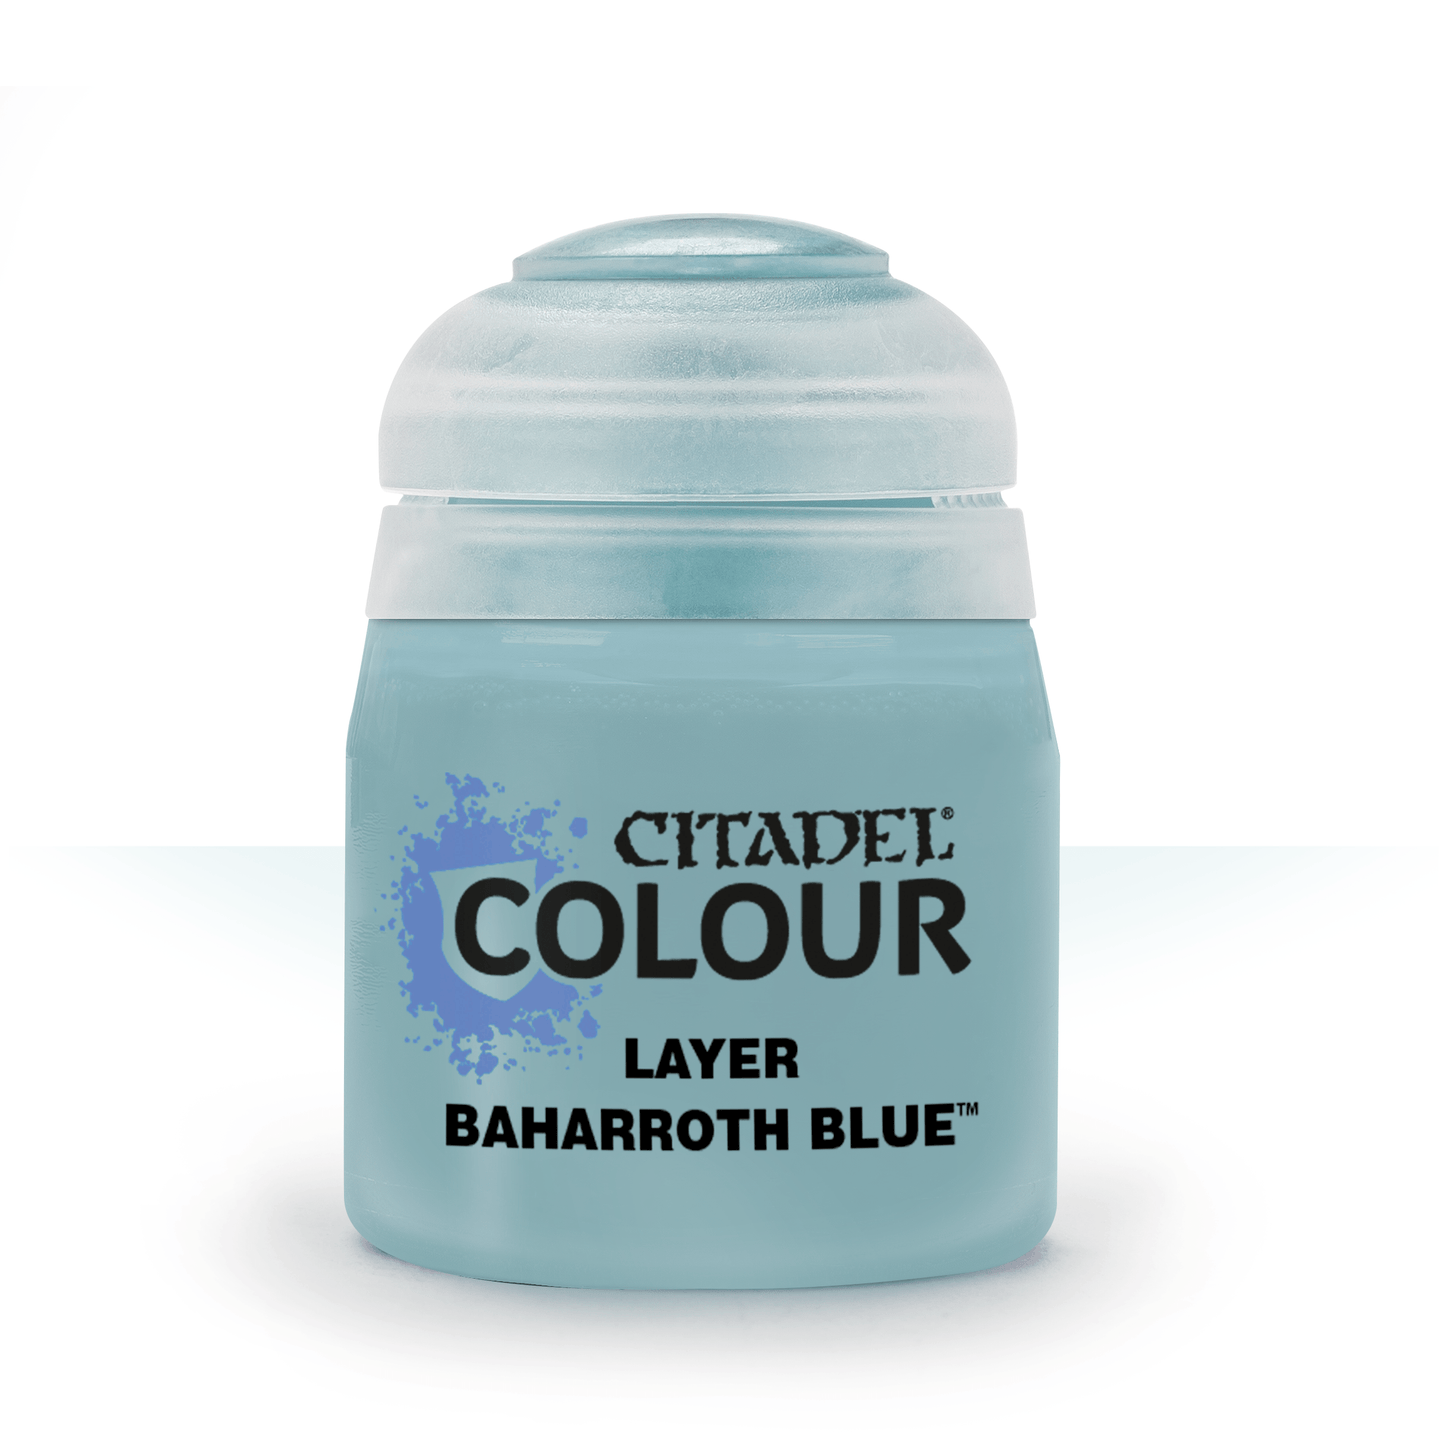 Layer Baharroth Blue